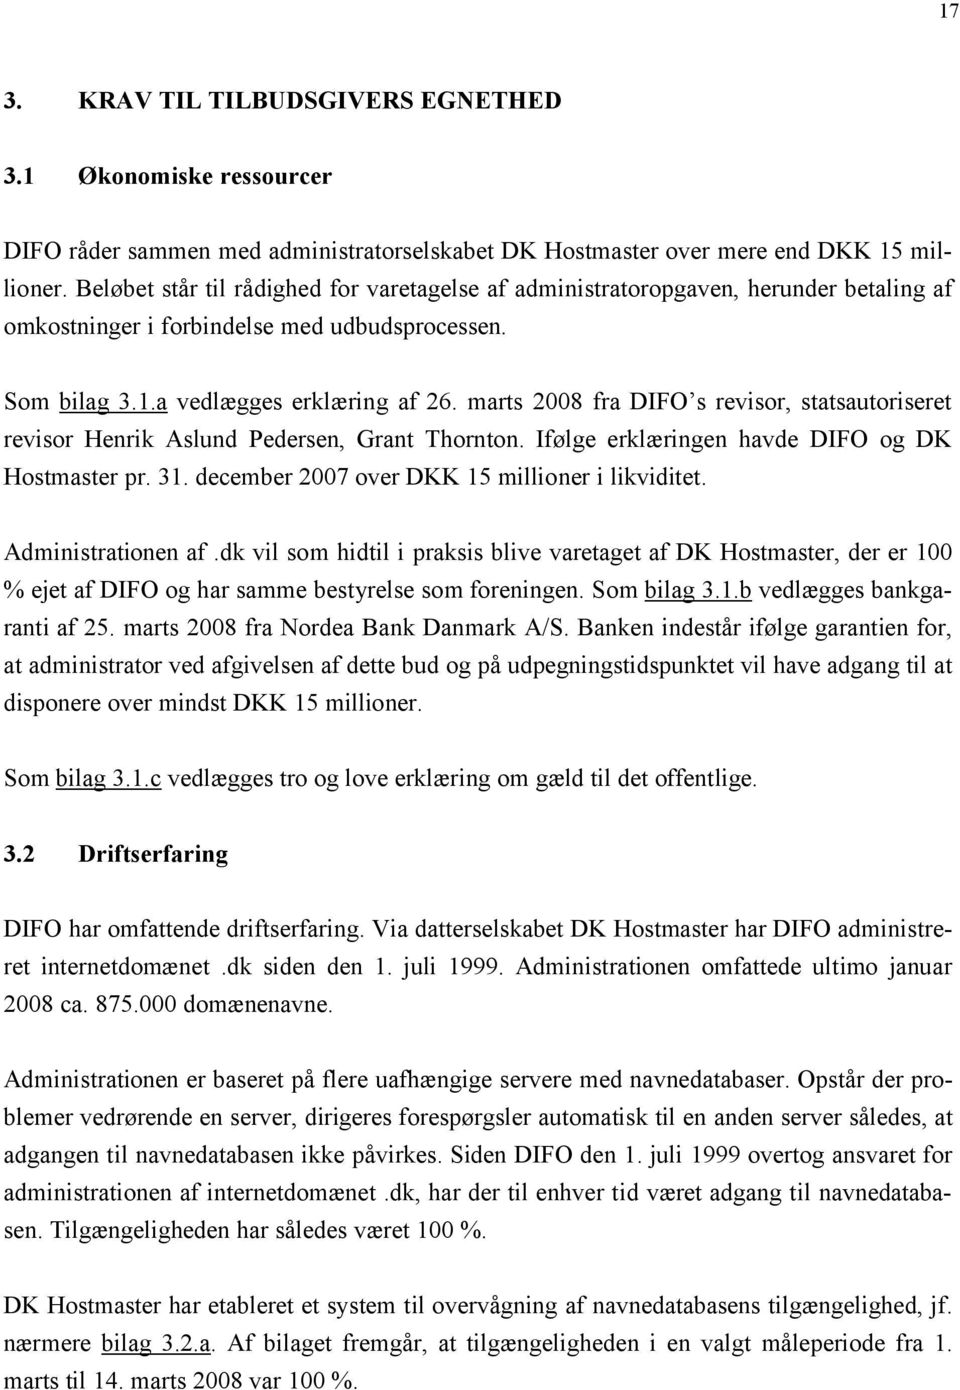 marts 2008 fra DIFO s revisor, statsautoriseret revisor Henrik Aslund Pedersen, Grant Thornton. Ifølge erklæringen havde DIFO og DK Hostmaster pr. 31. december 2007 over DKK 15 millioner i likviditet.